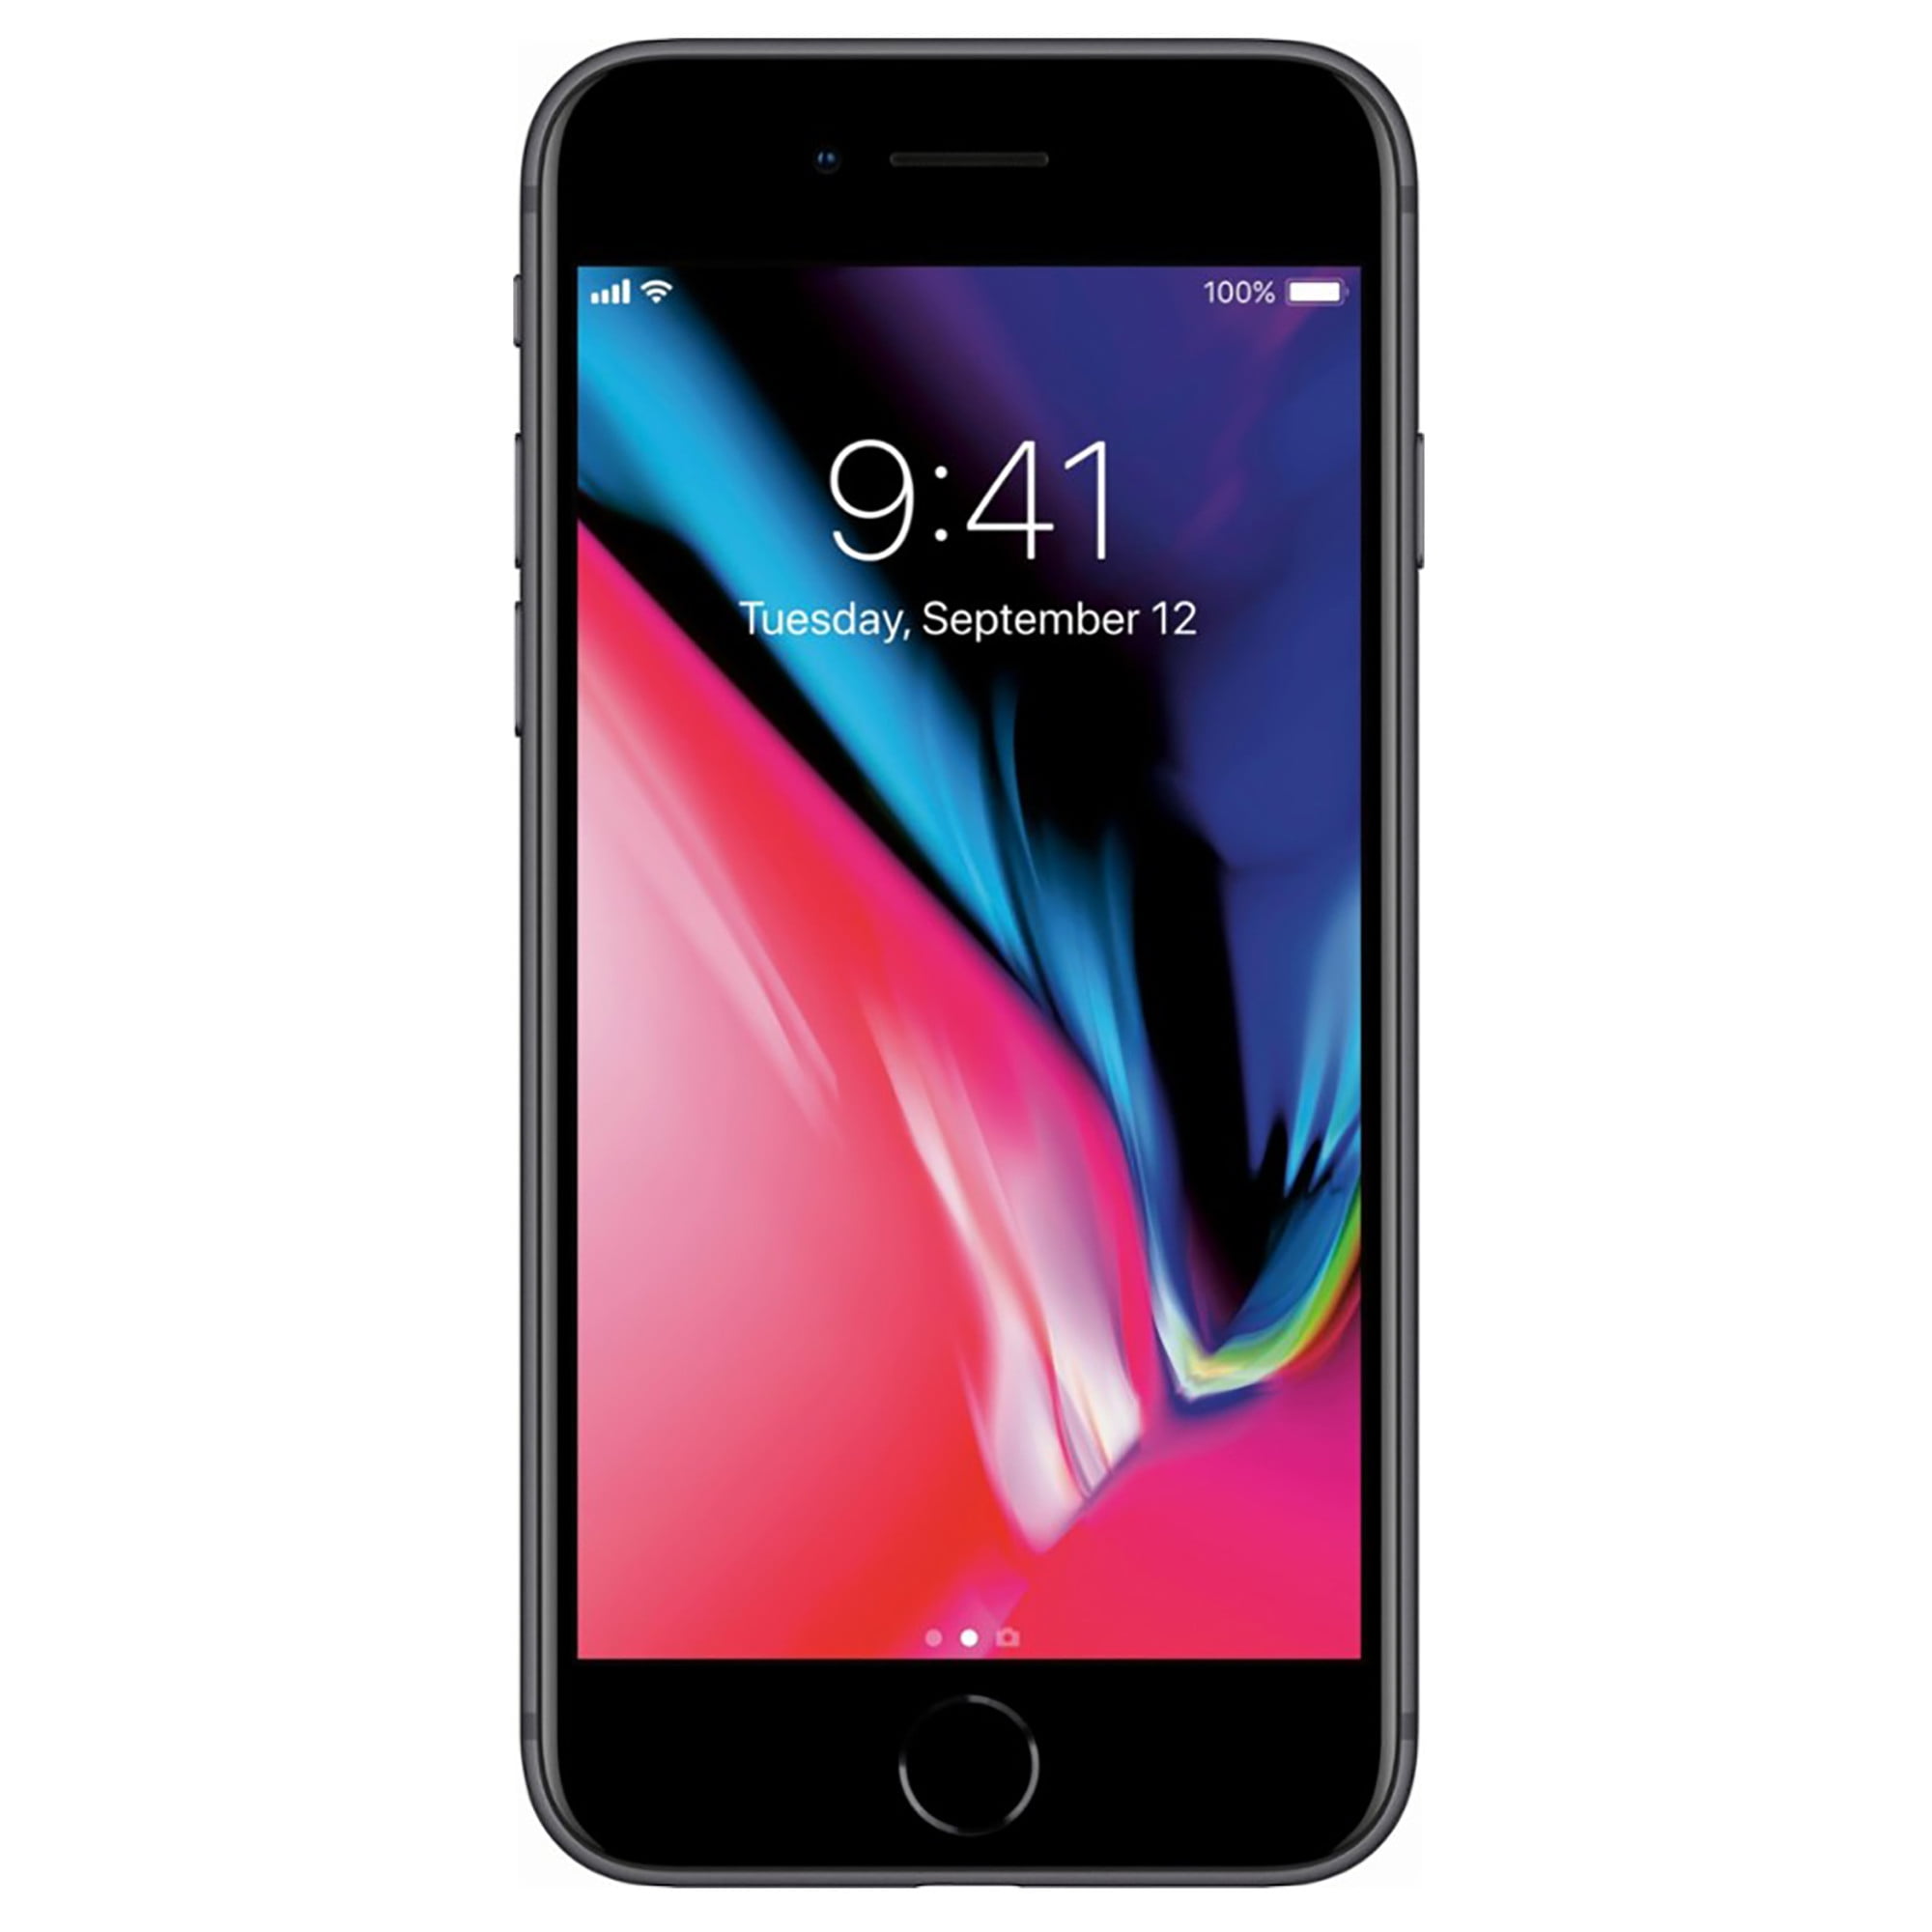 Apple iPhone 8 64GB Unlocked GSM Phone w/ 12MP Camera - Space Gray - B  Grade Used